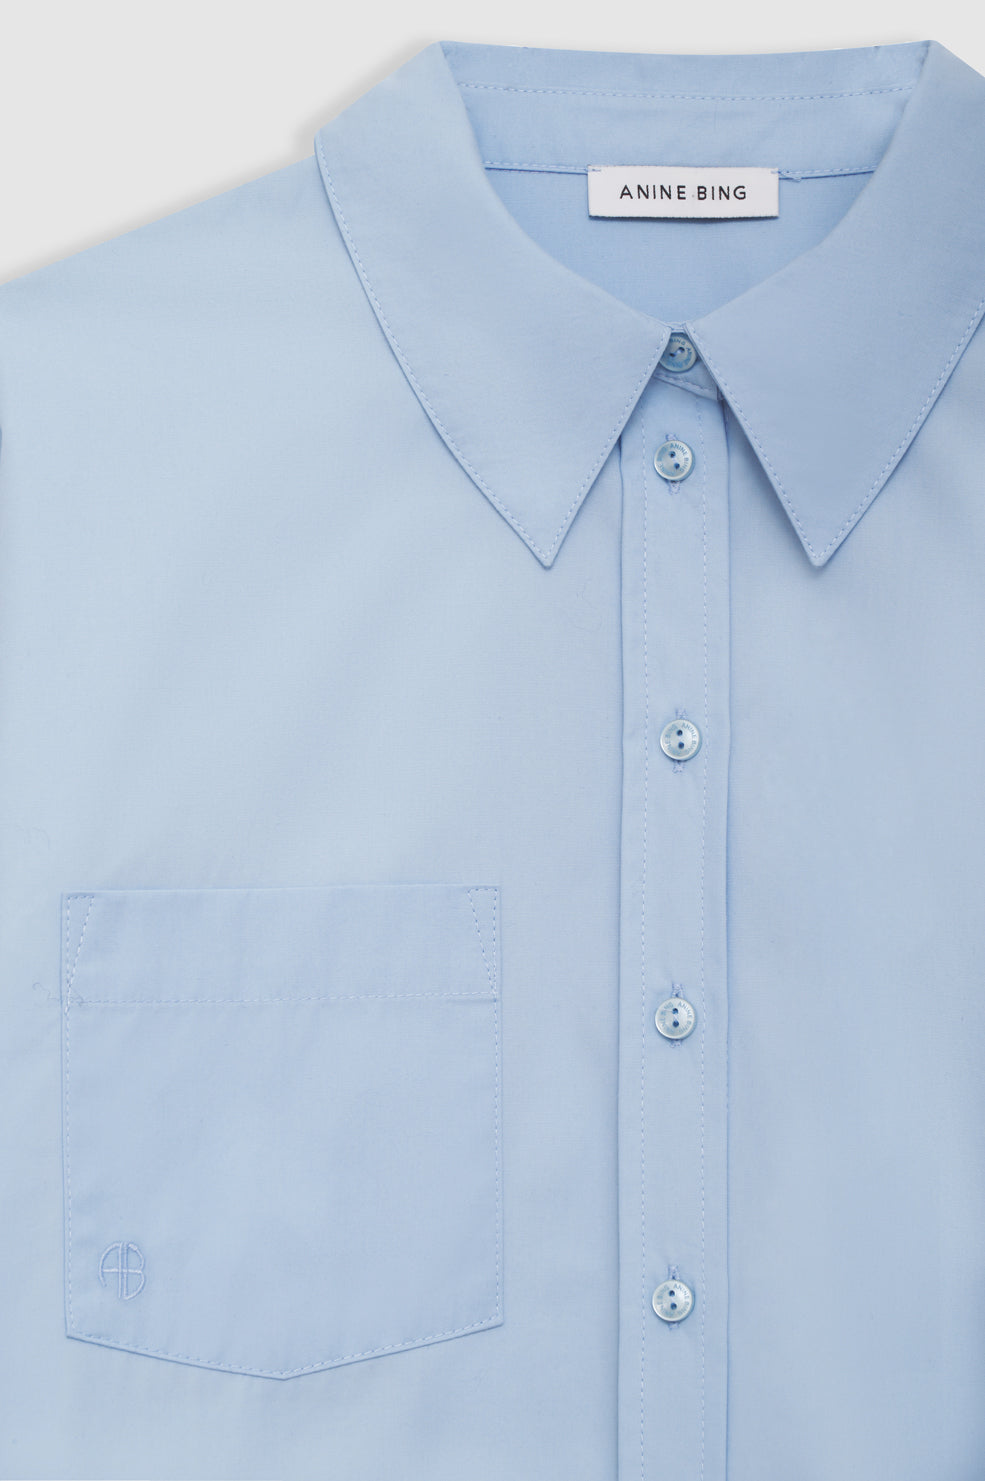 ANINE BING Maxine Shirt - Blue - Detail View